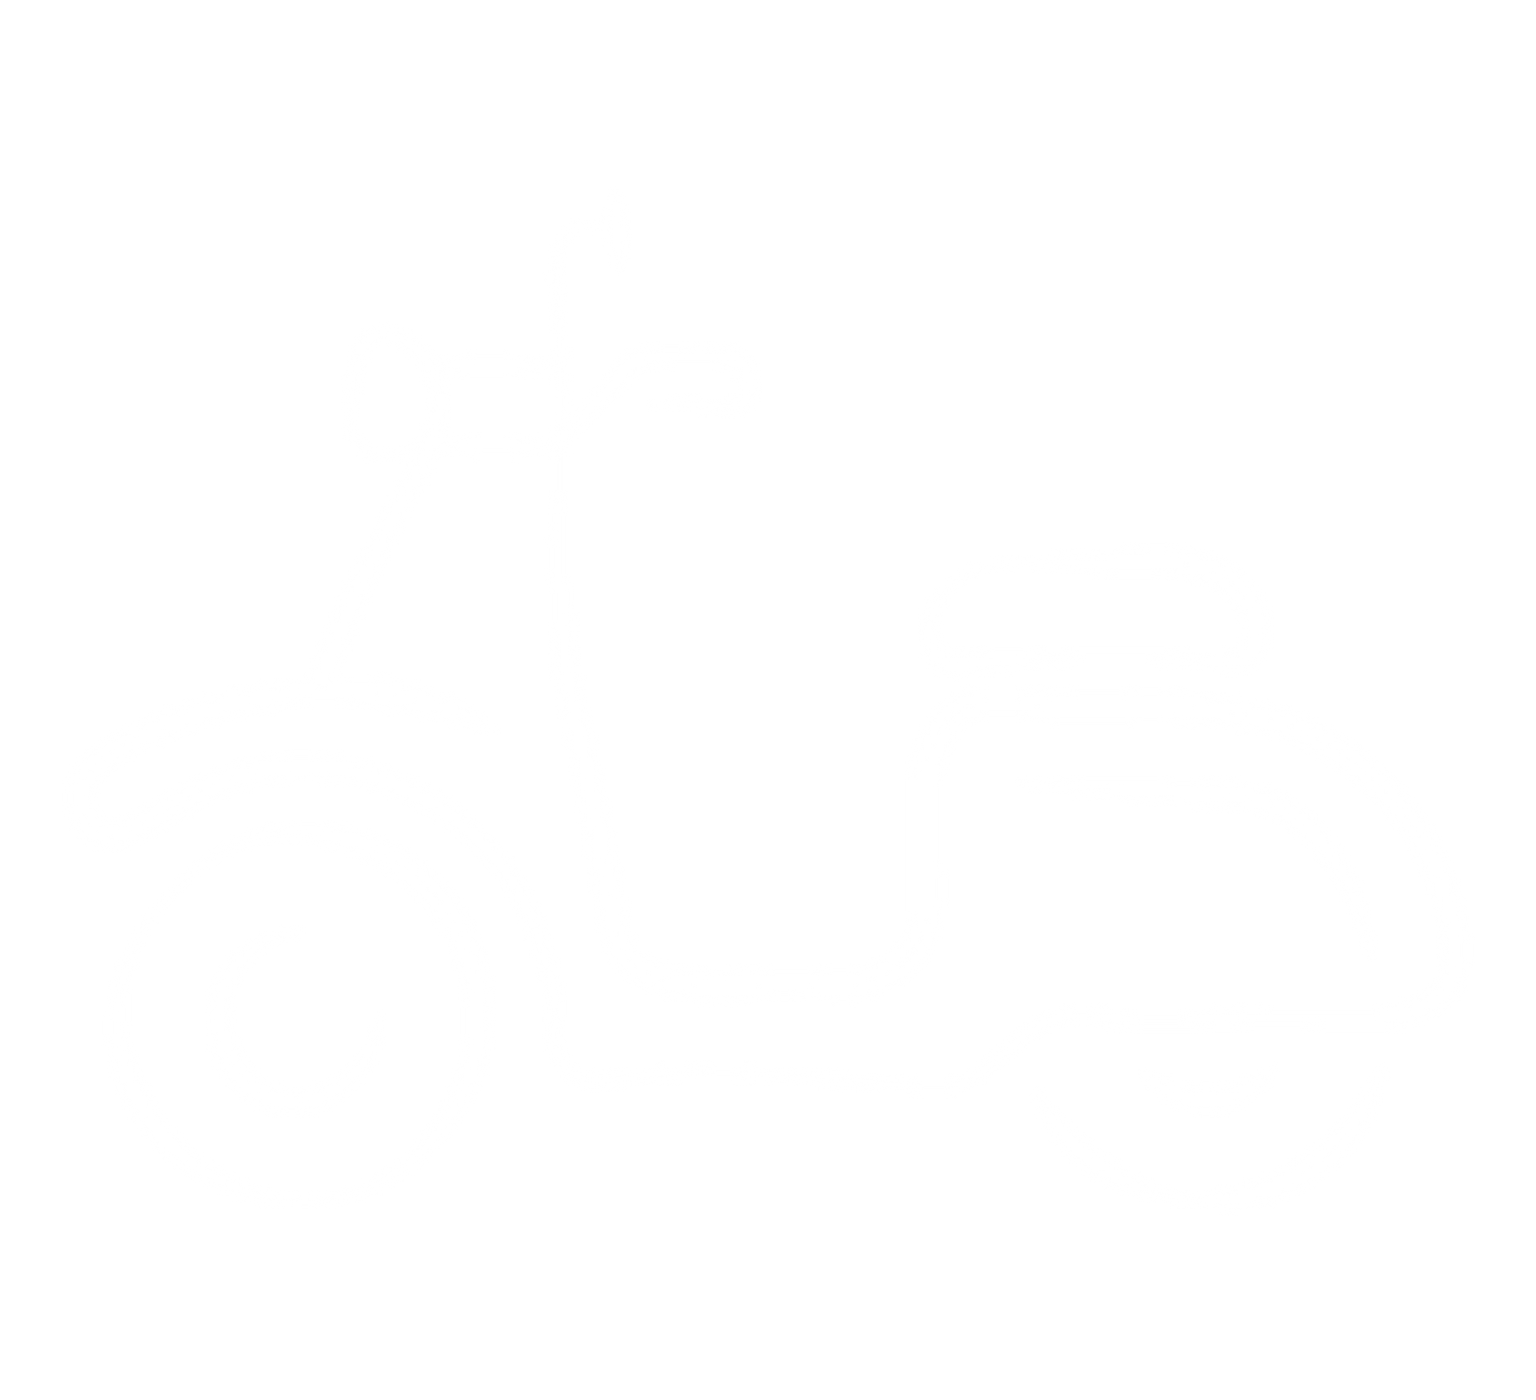 Location de scooters